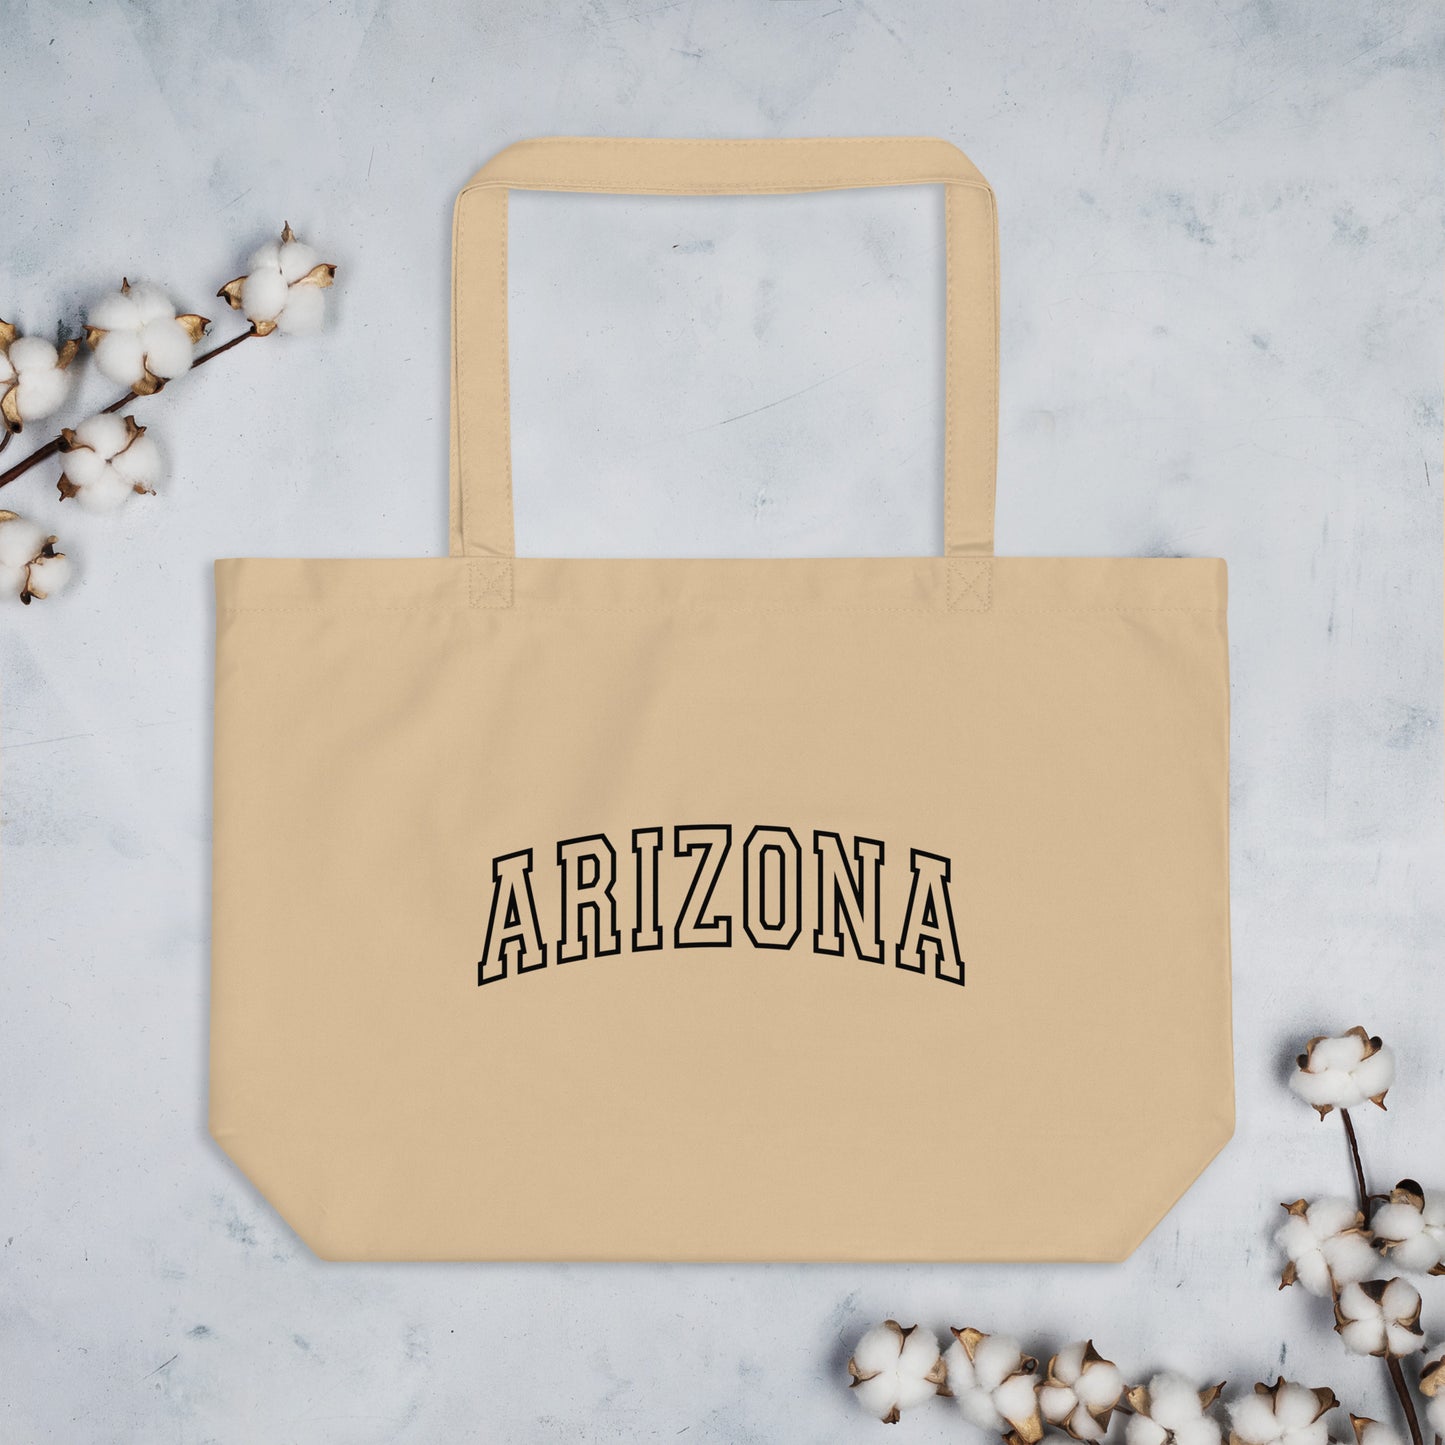 Arizona Large organic tote bag